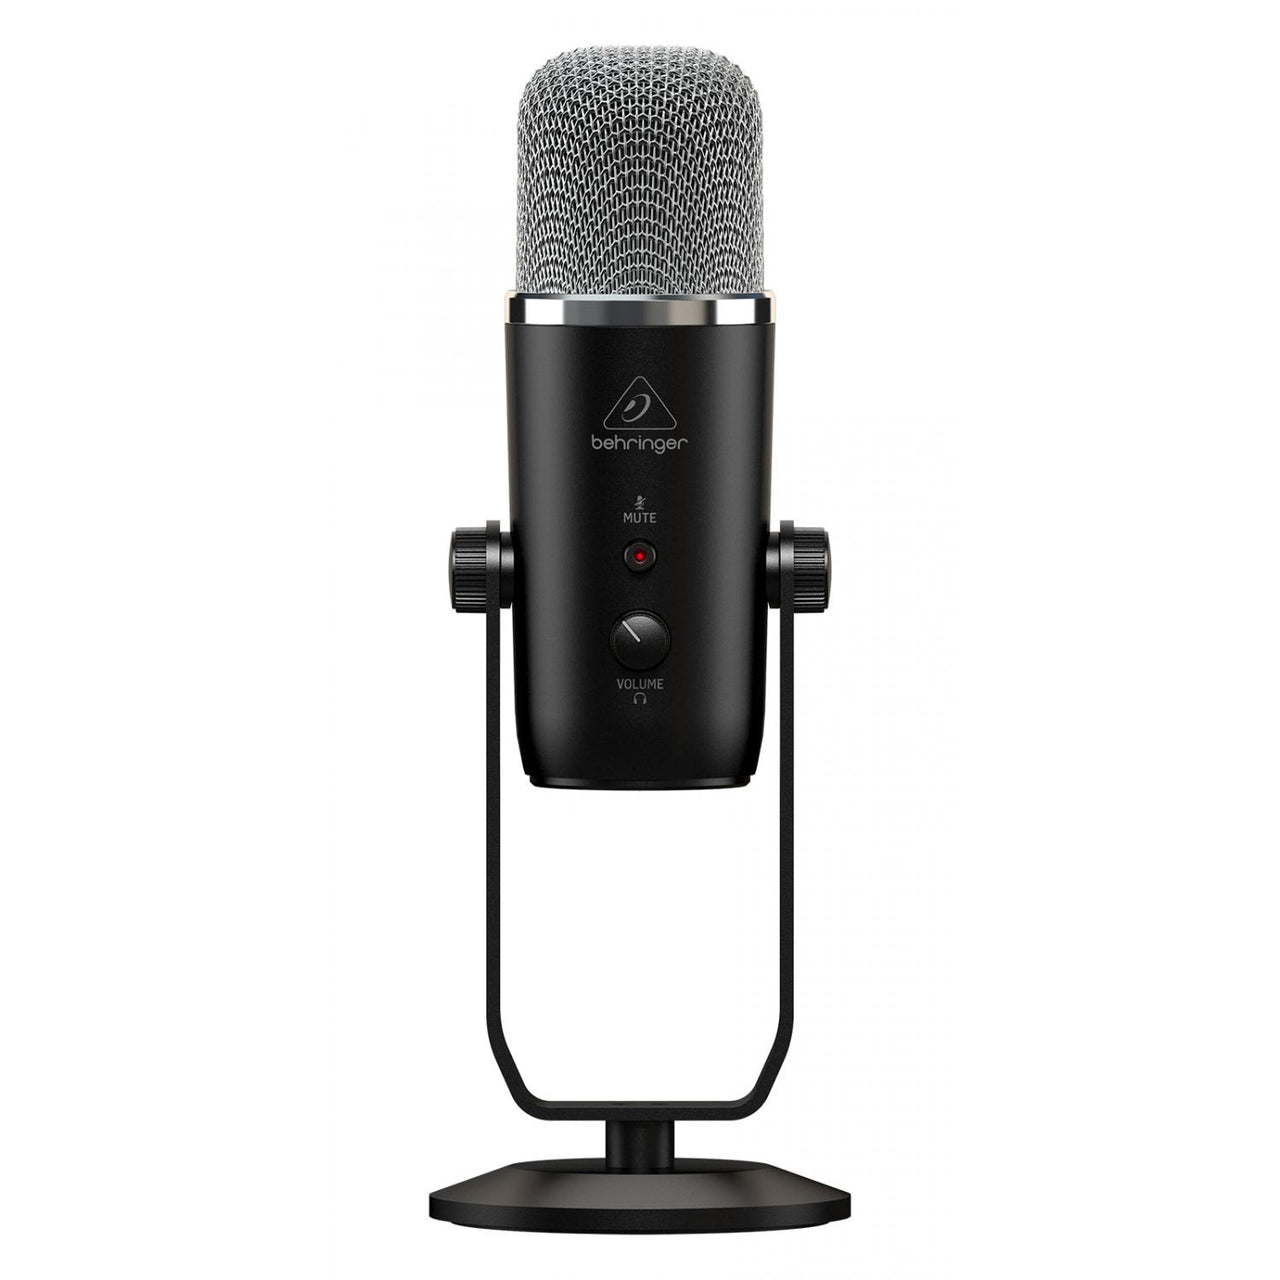 Microfono Behringer Bigfoot Usb para Podcast y Home Studio